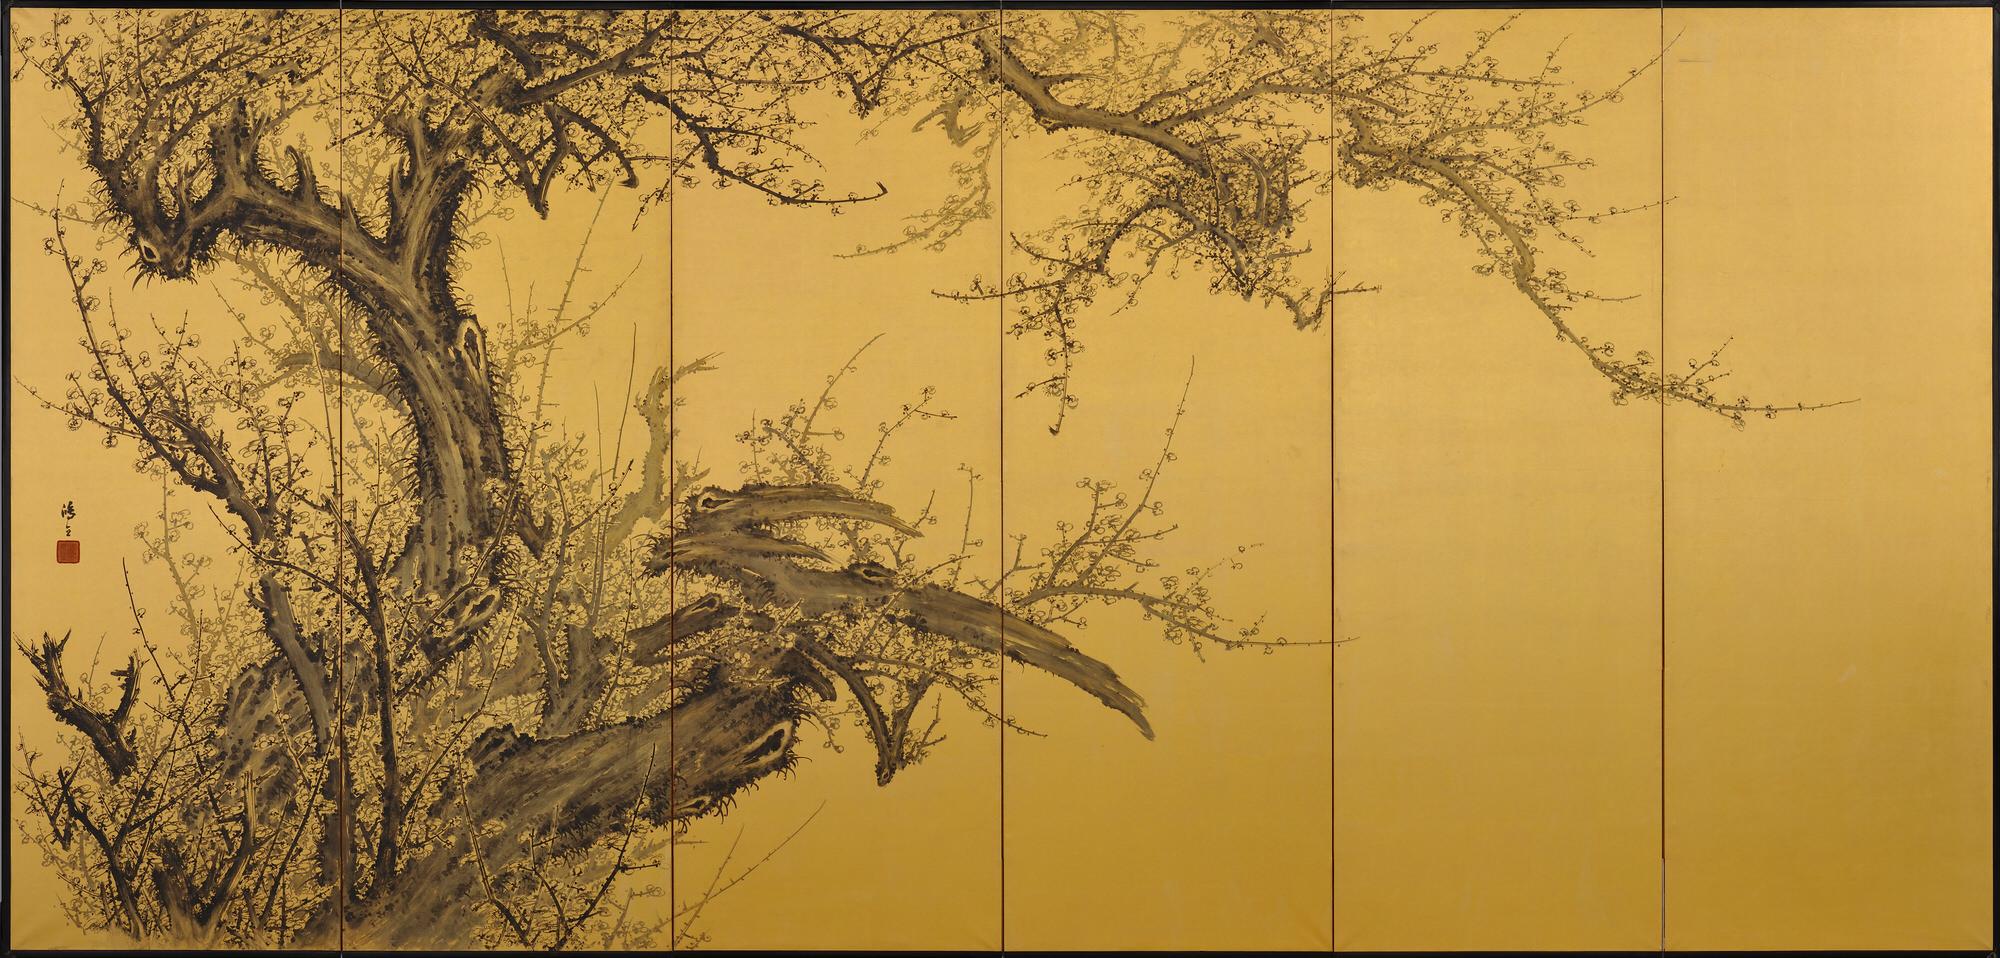 Gold Leaf Japanese Screen Pair, Plum Blossoms, Kawakami Koritsu